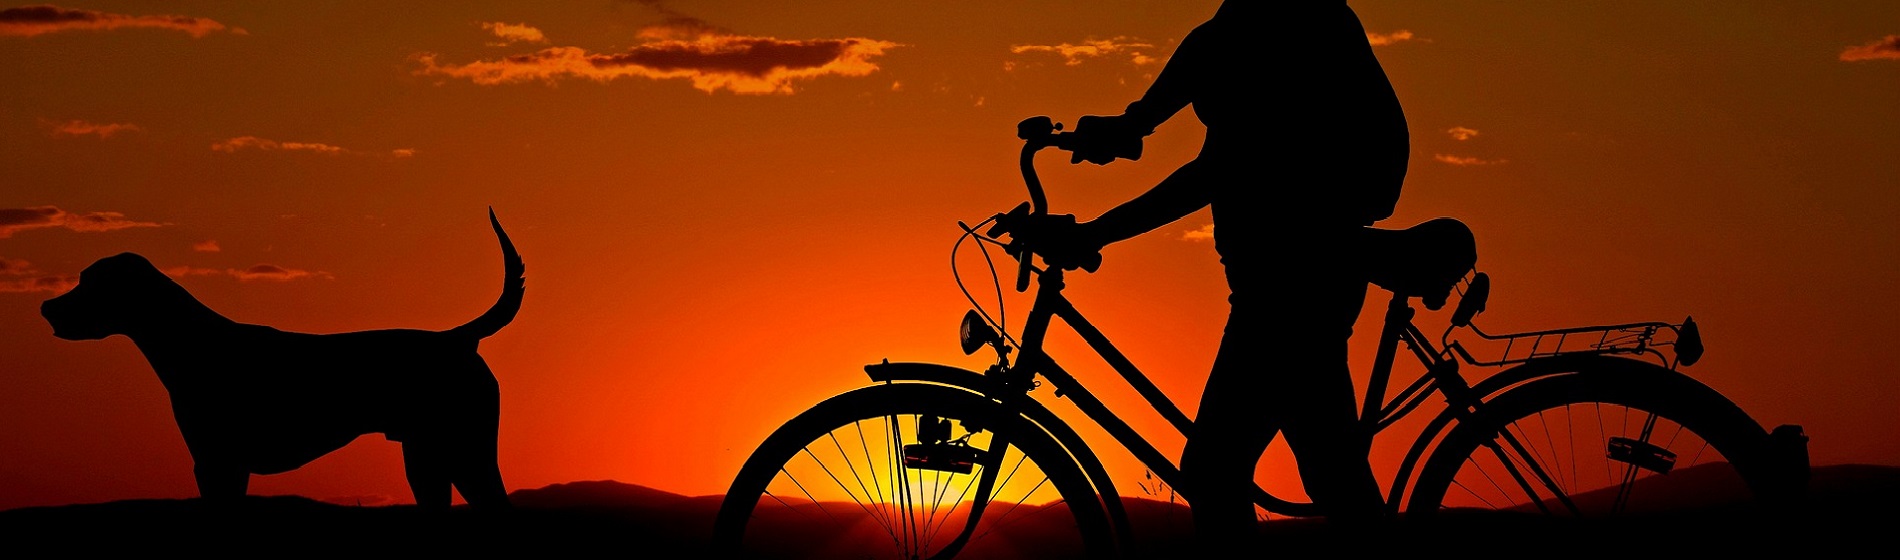 sunset view of woman walking dog and pushing bike